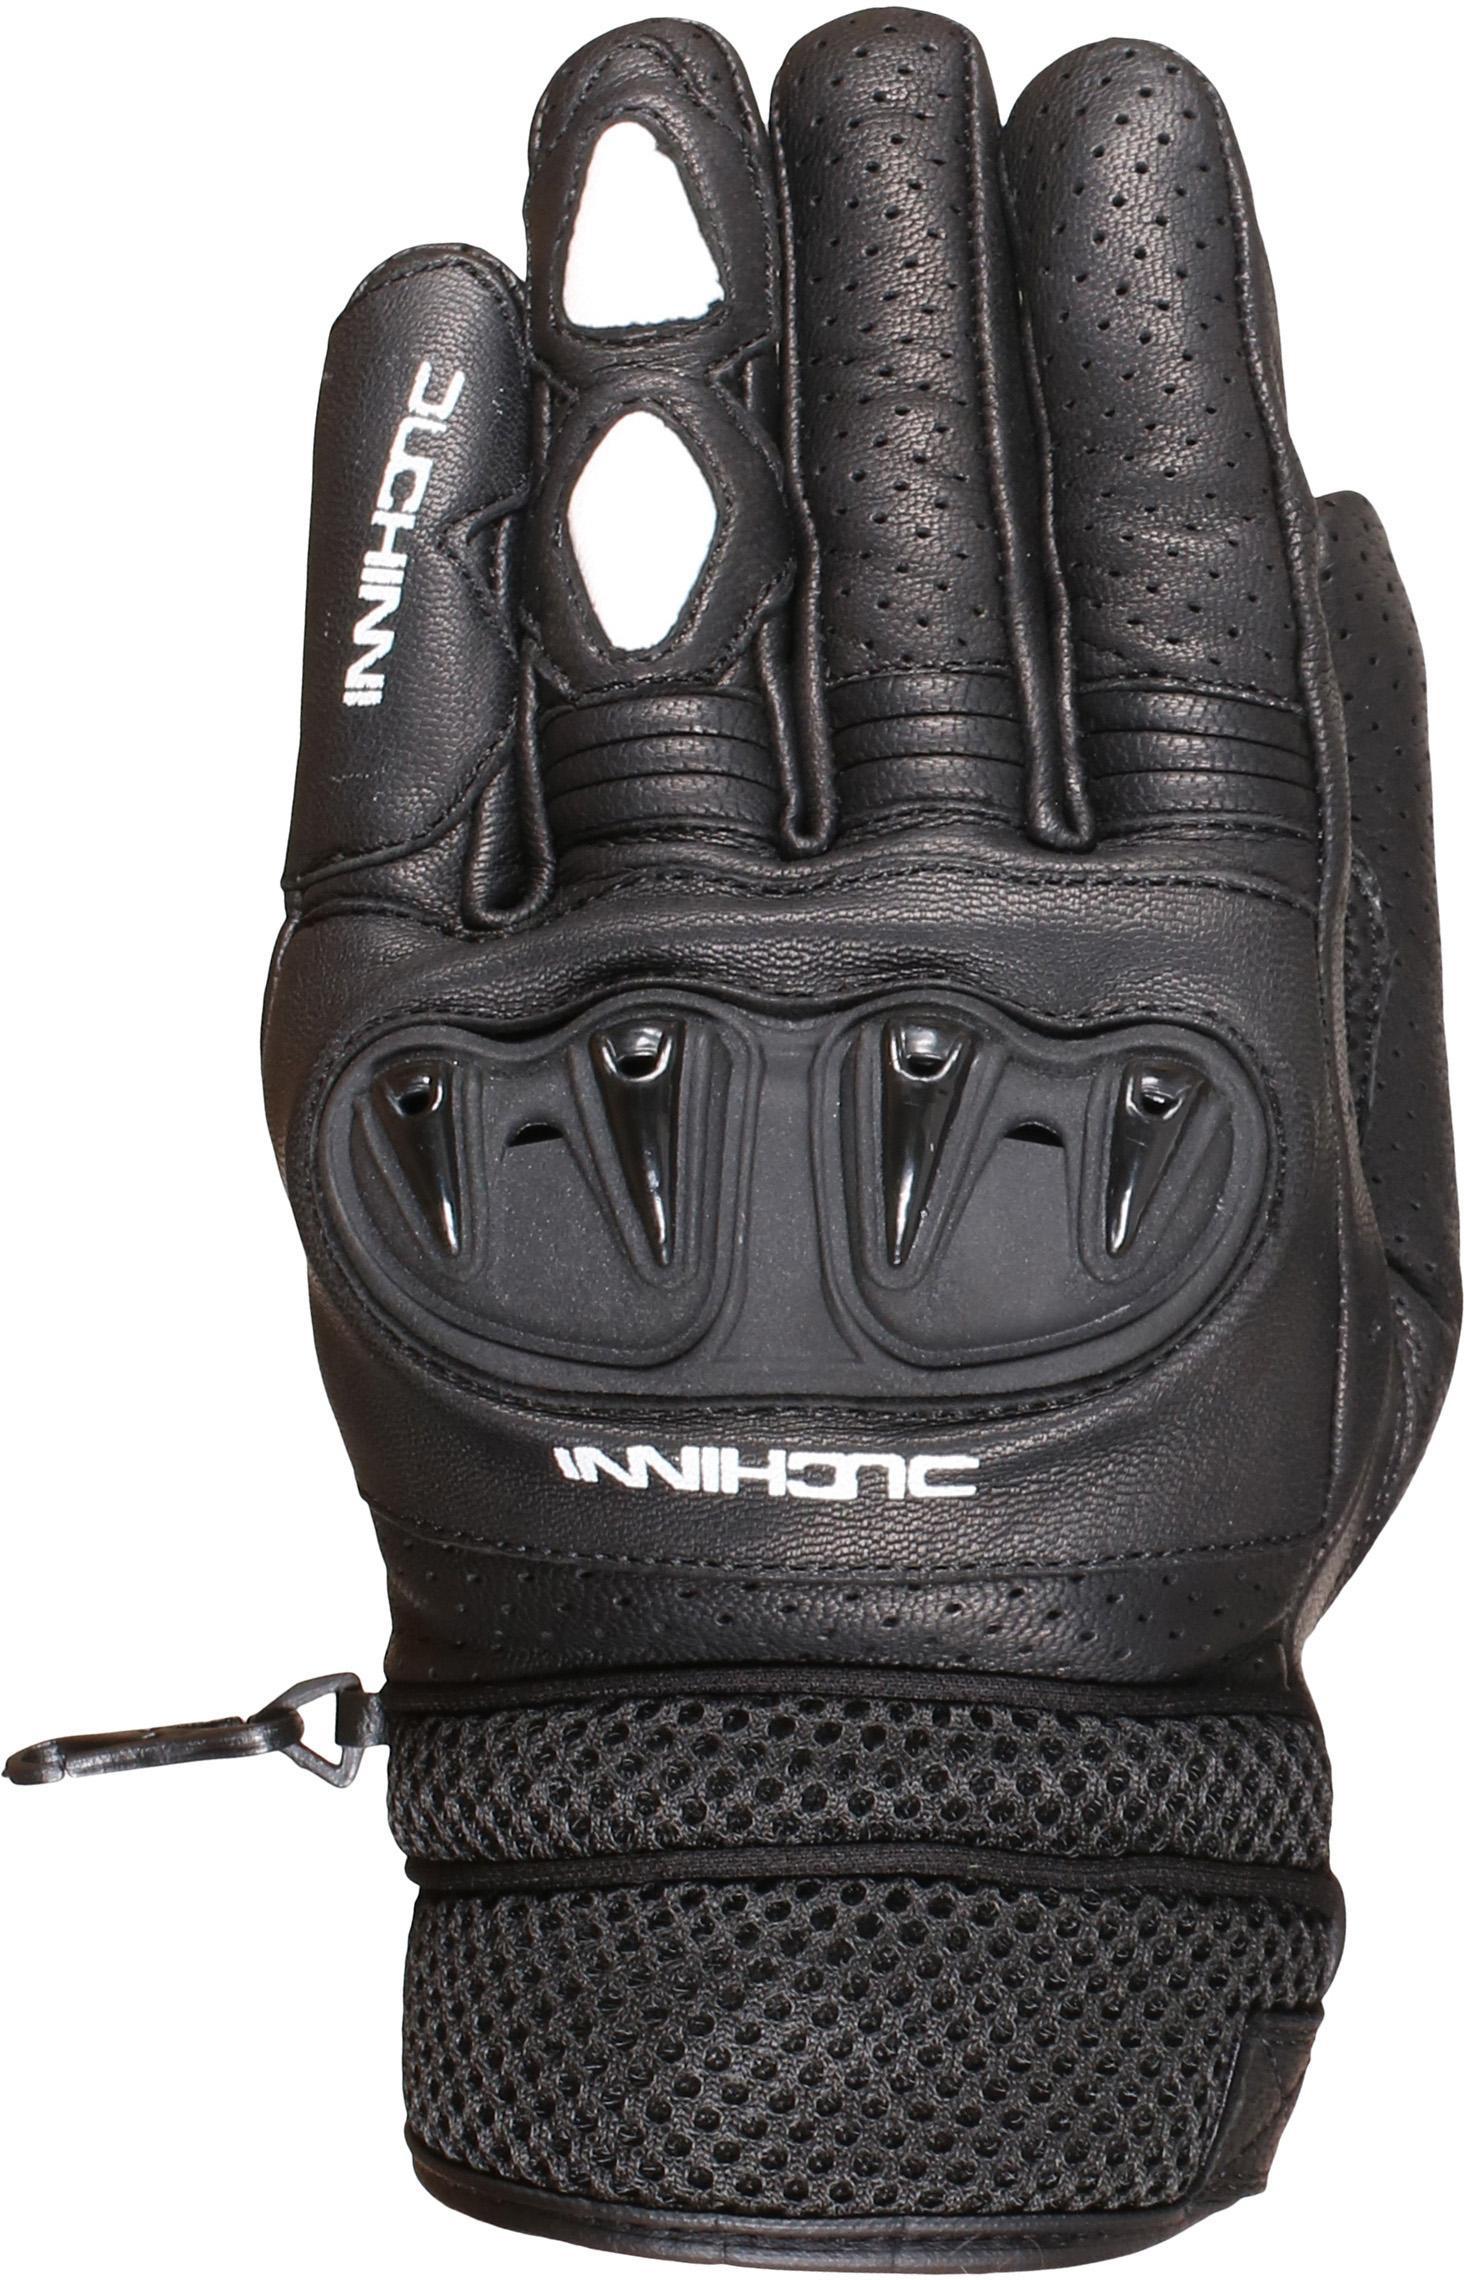 Duchinni Ostro Motorcycle Gloves - Black, M